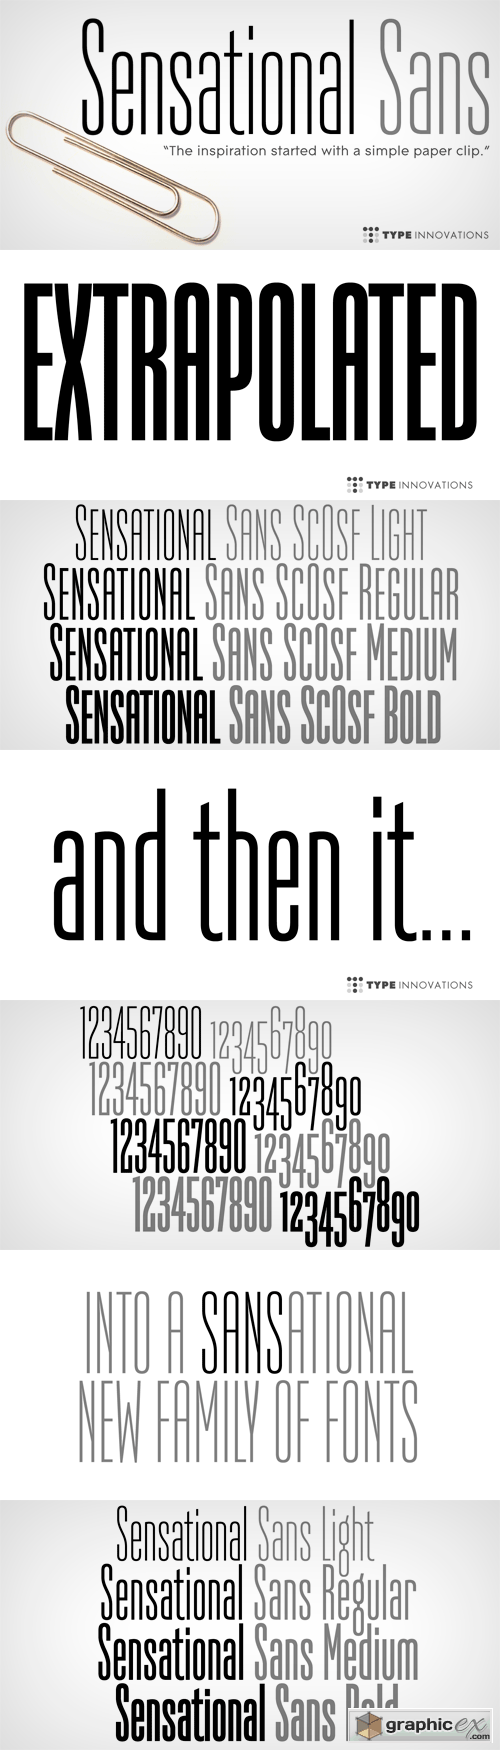 Sensational Sans Font Family - 8 Fonts for $158